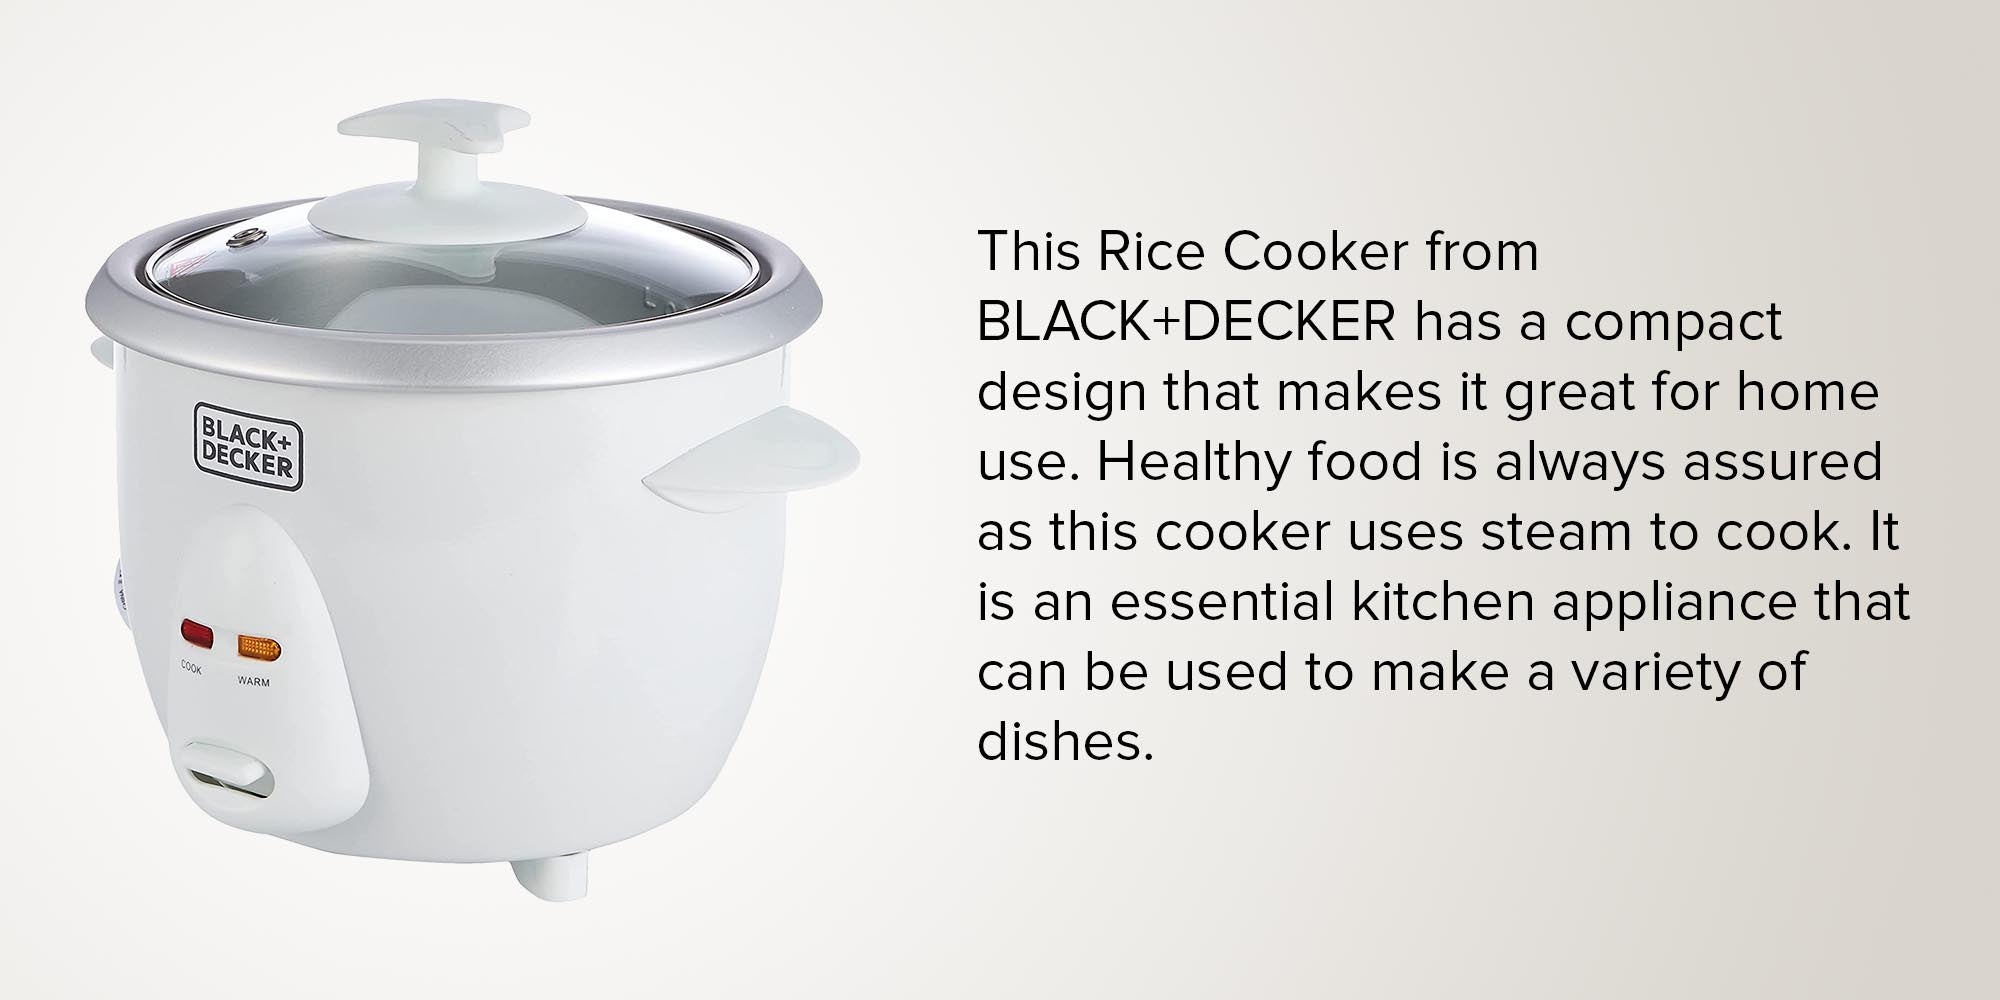 Black+Decker RC650-B5 | Automatic Rice Cooker 